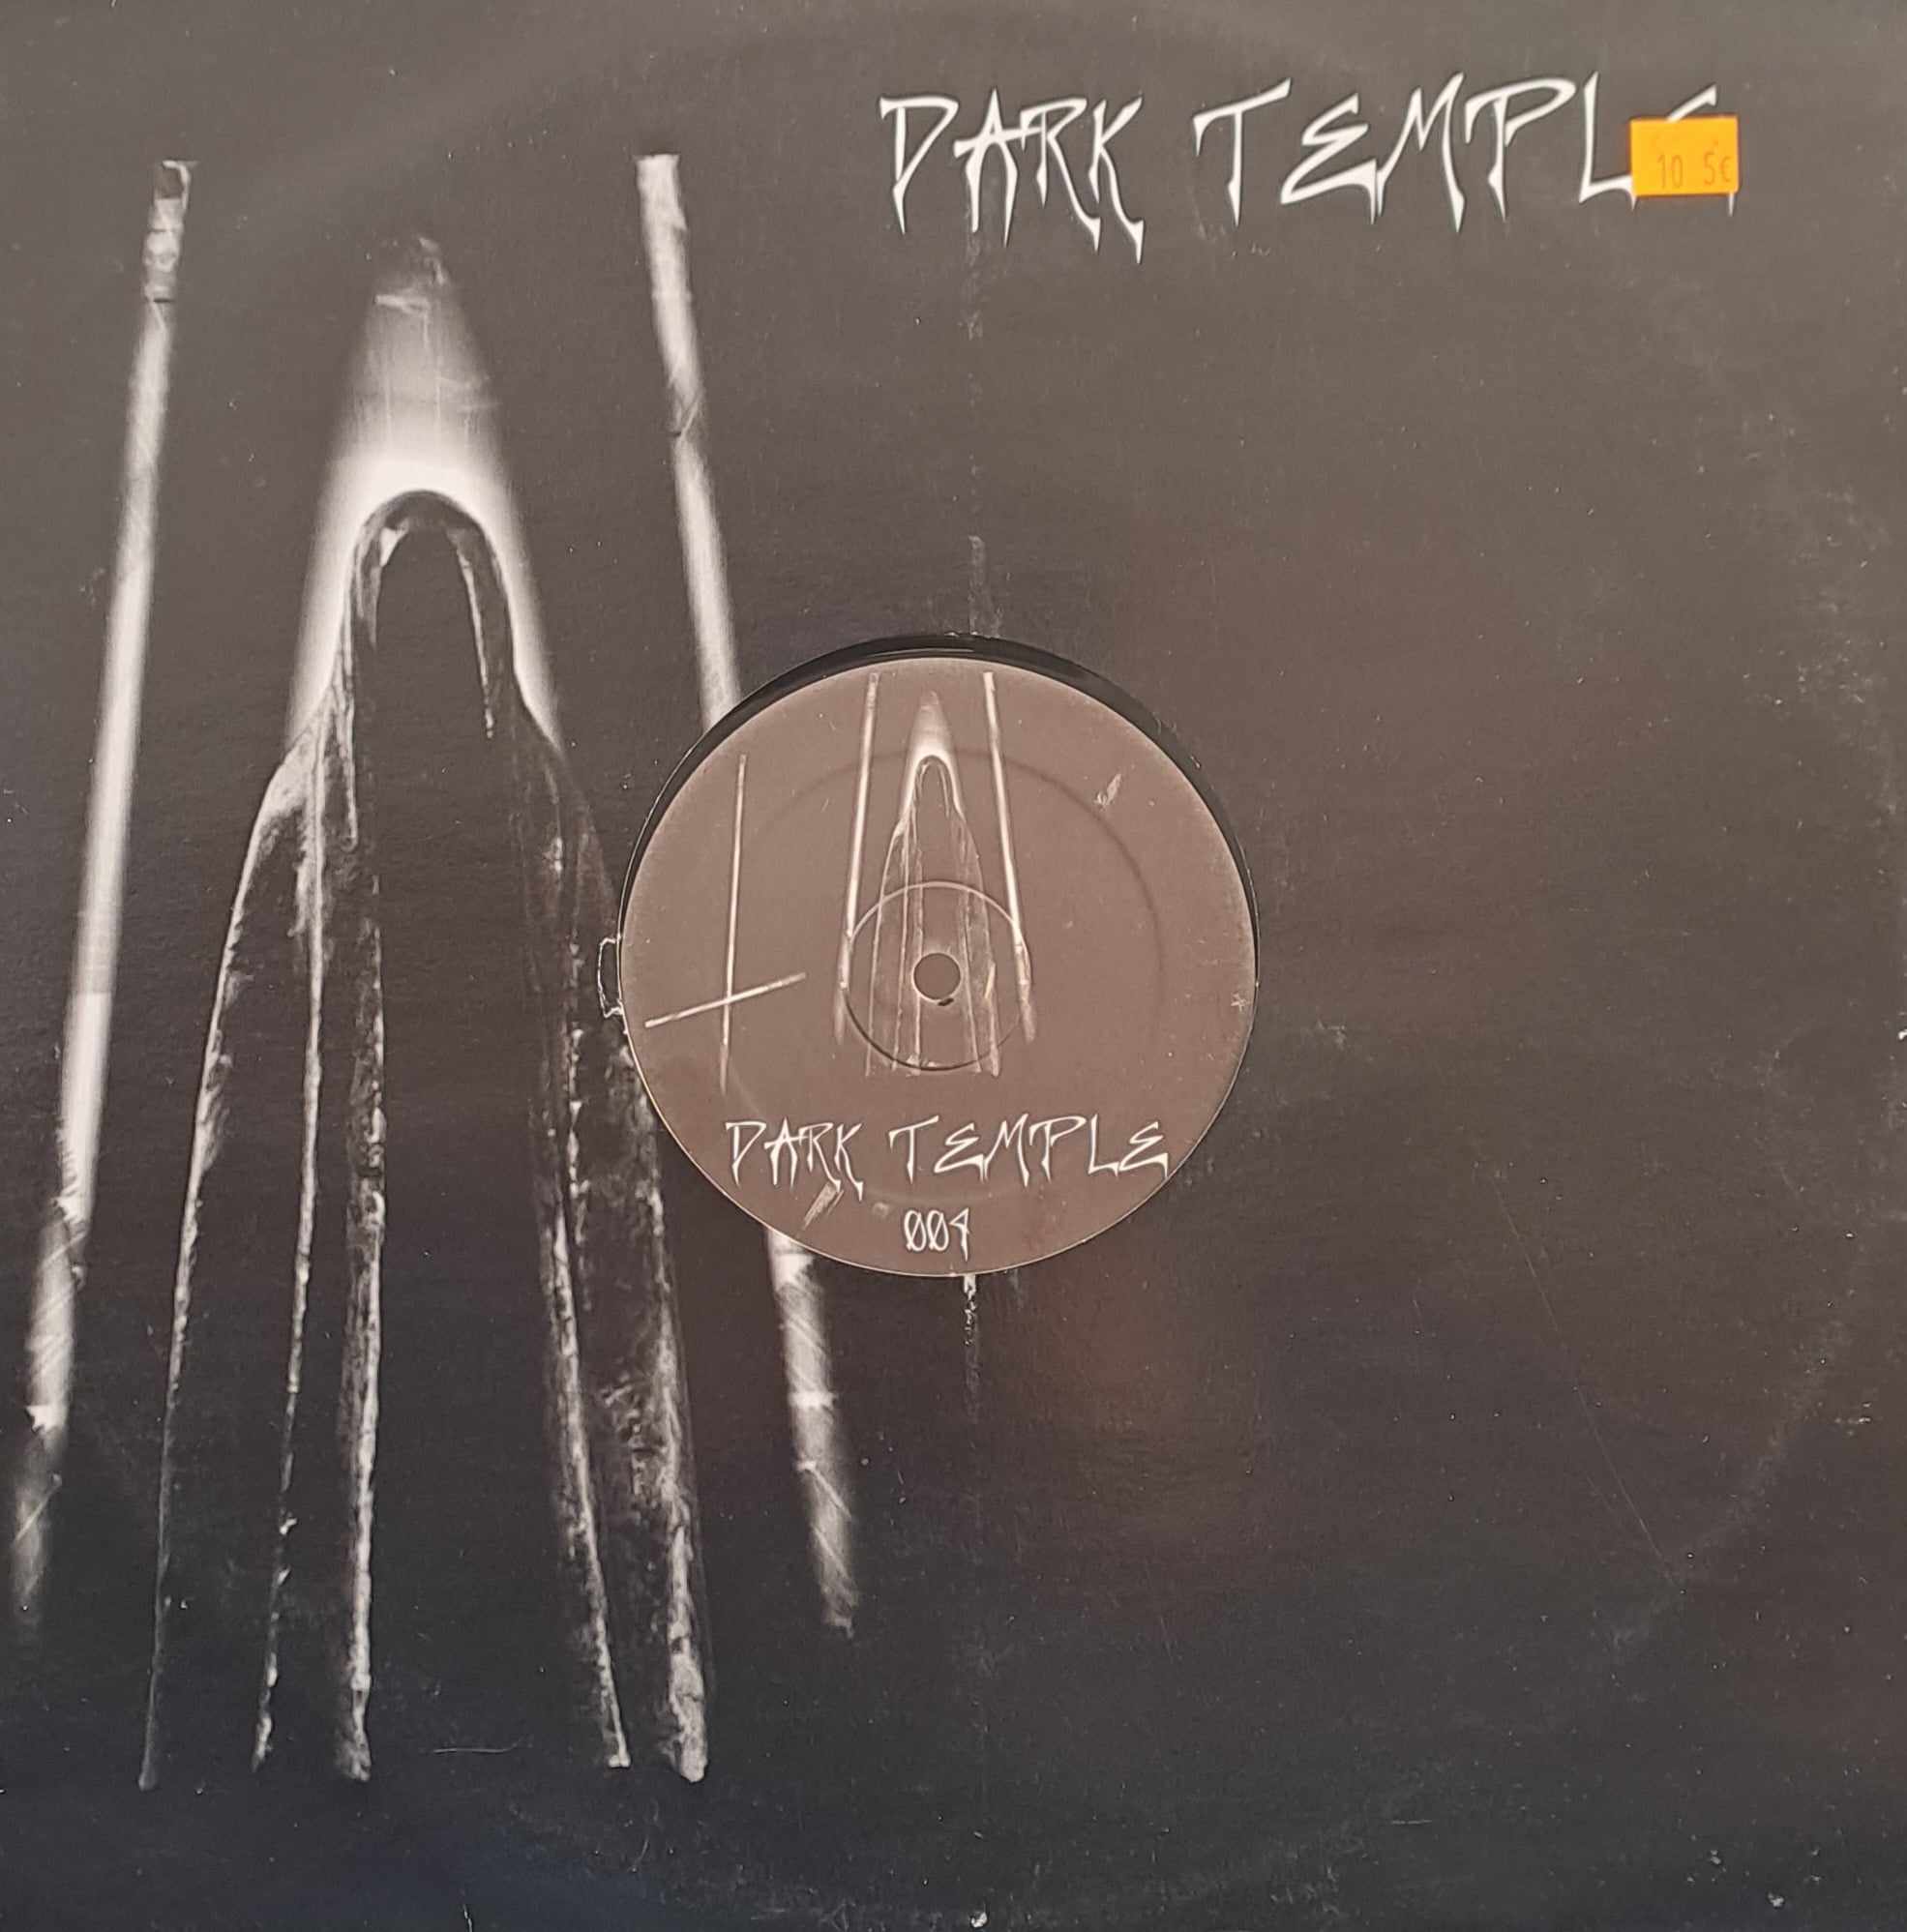 Dark Temple 004 - vinyle hardcore